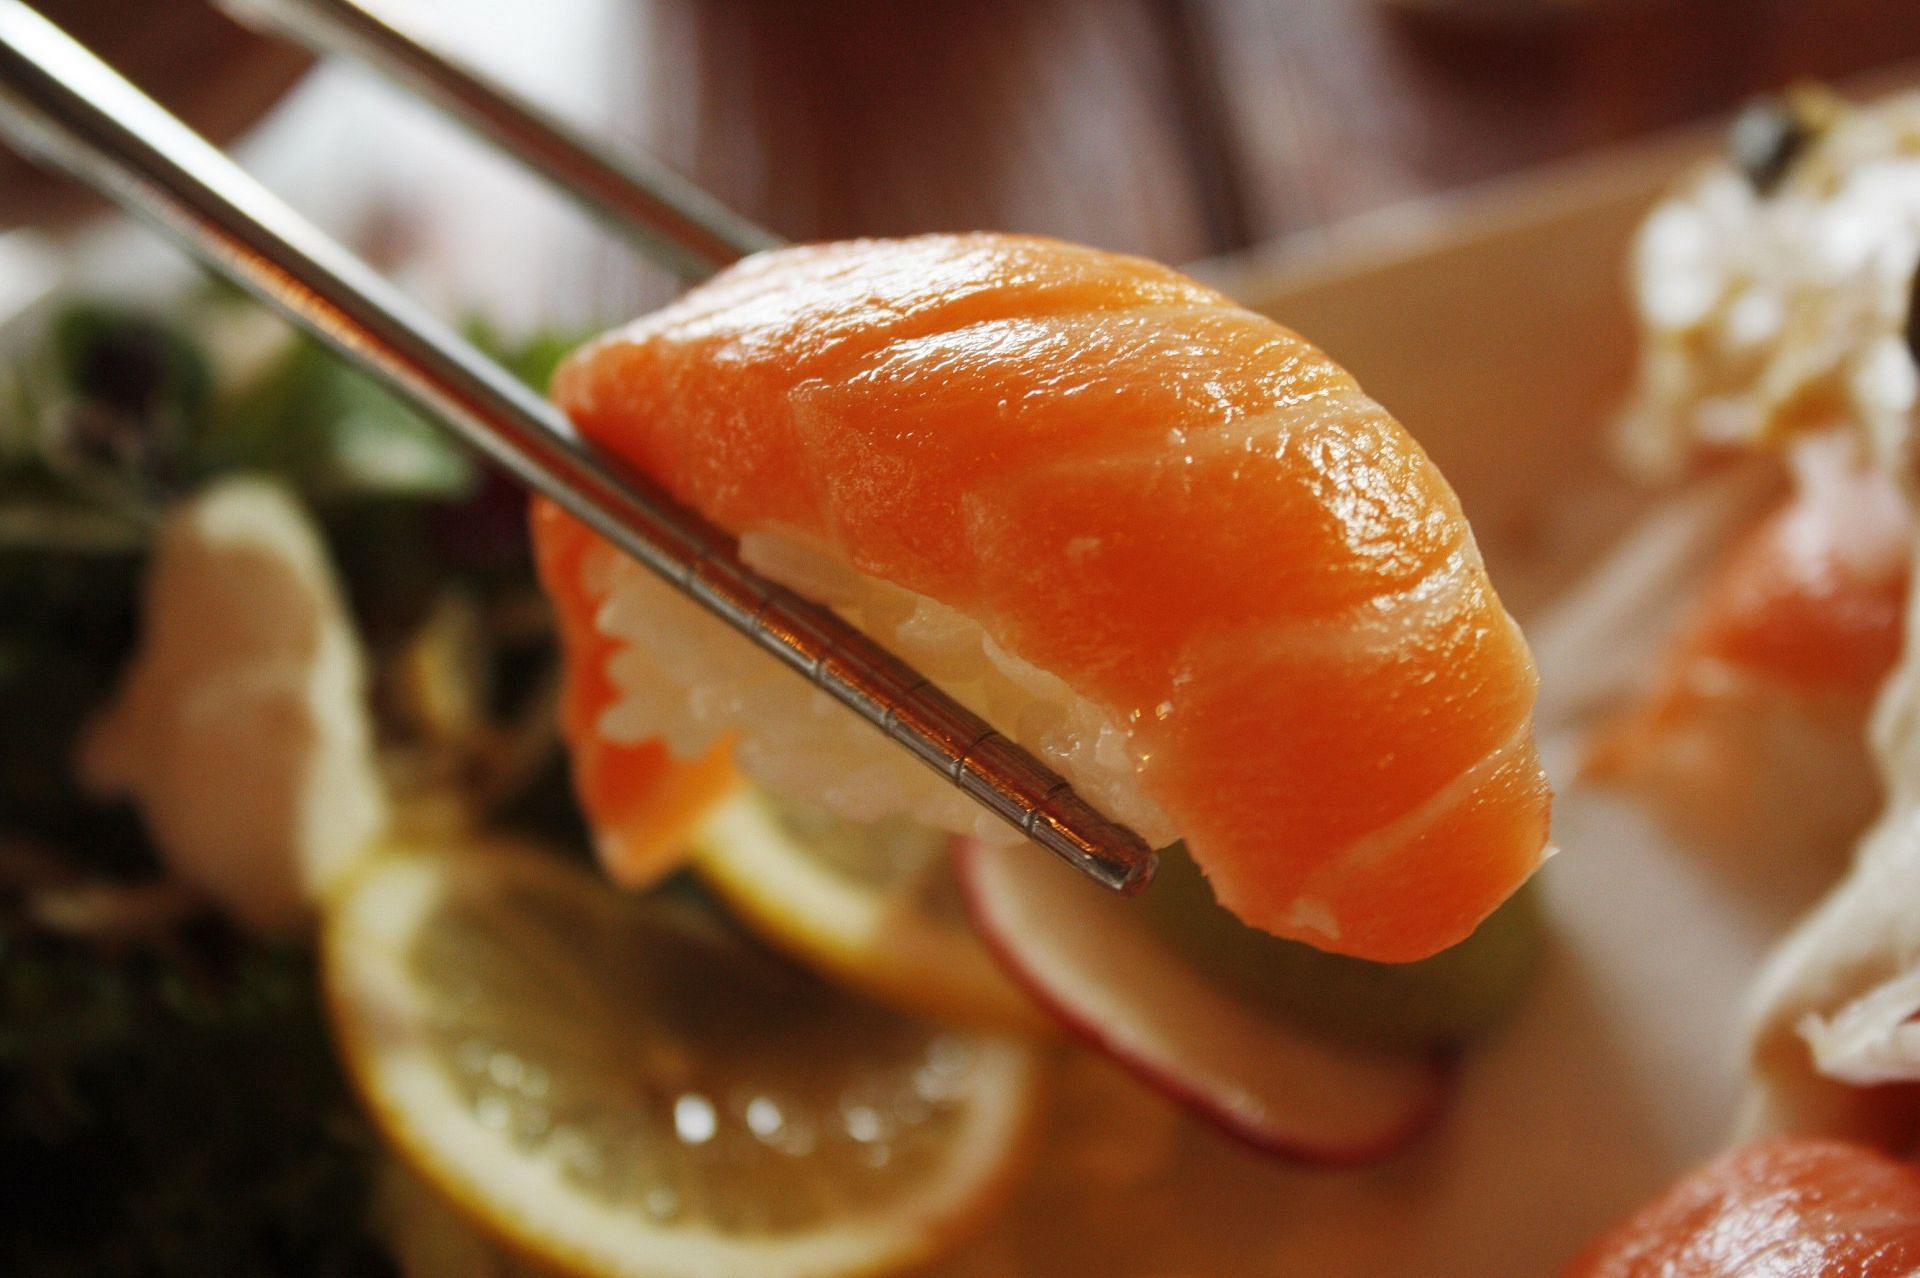 omega rich food is essential for long life. (image via pexels /pixabay)